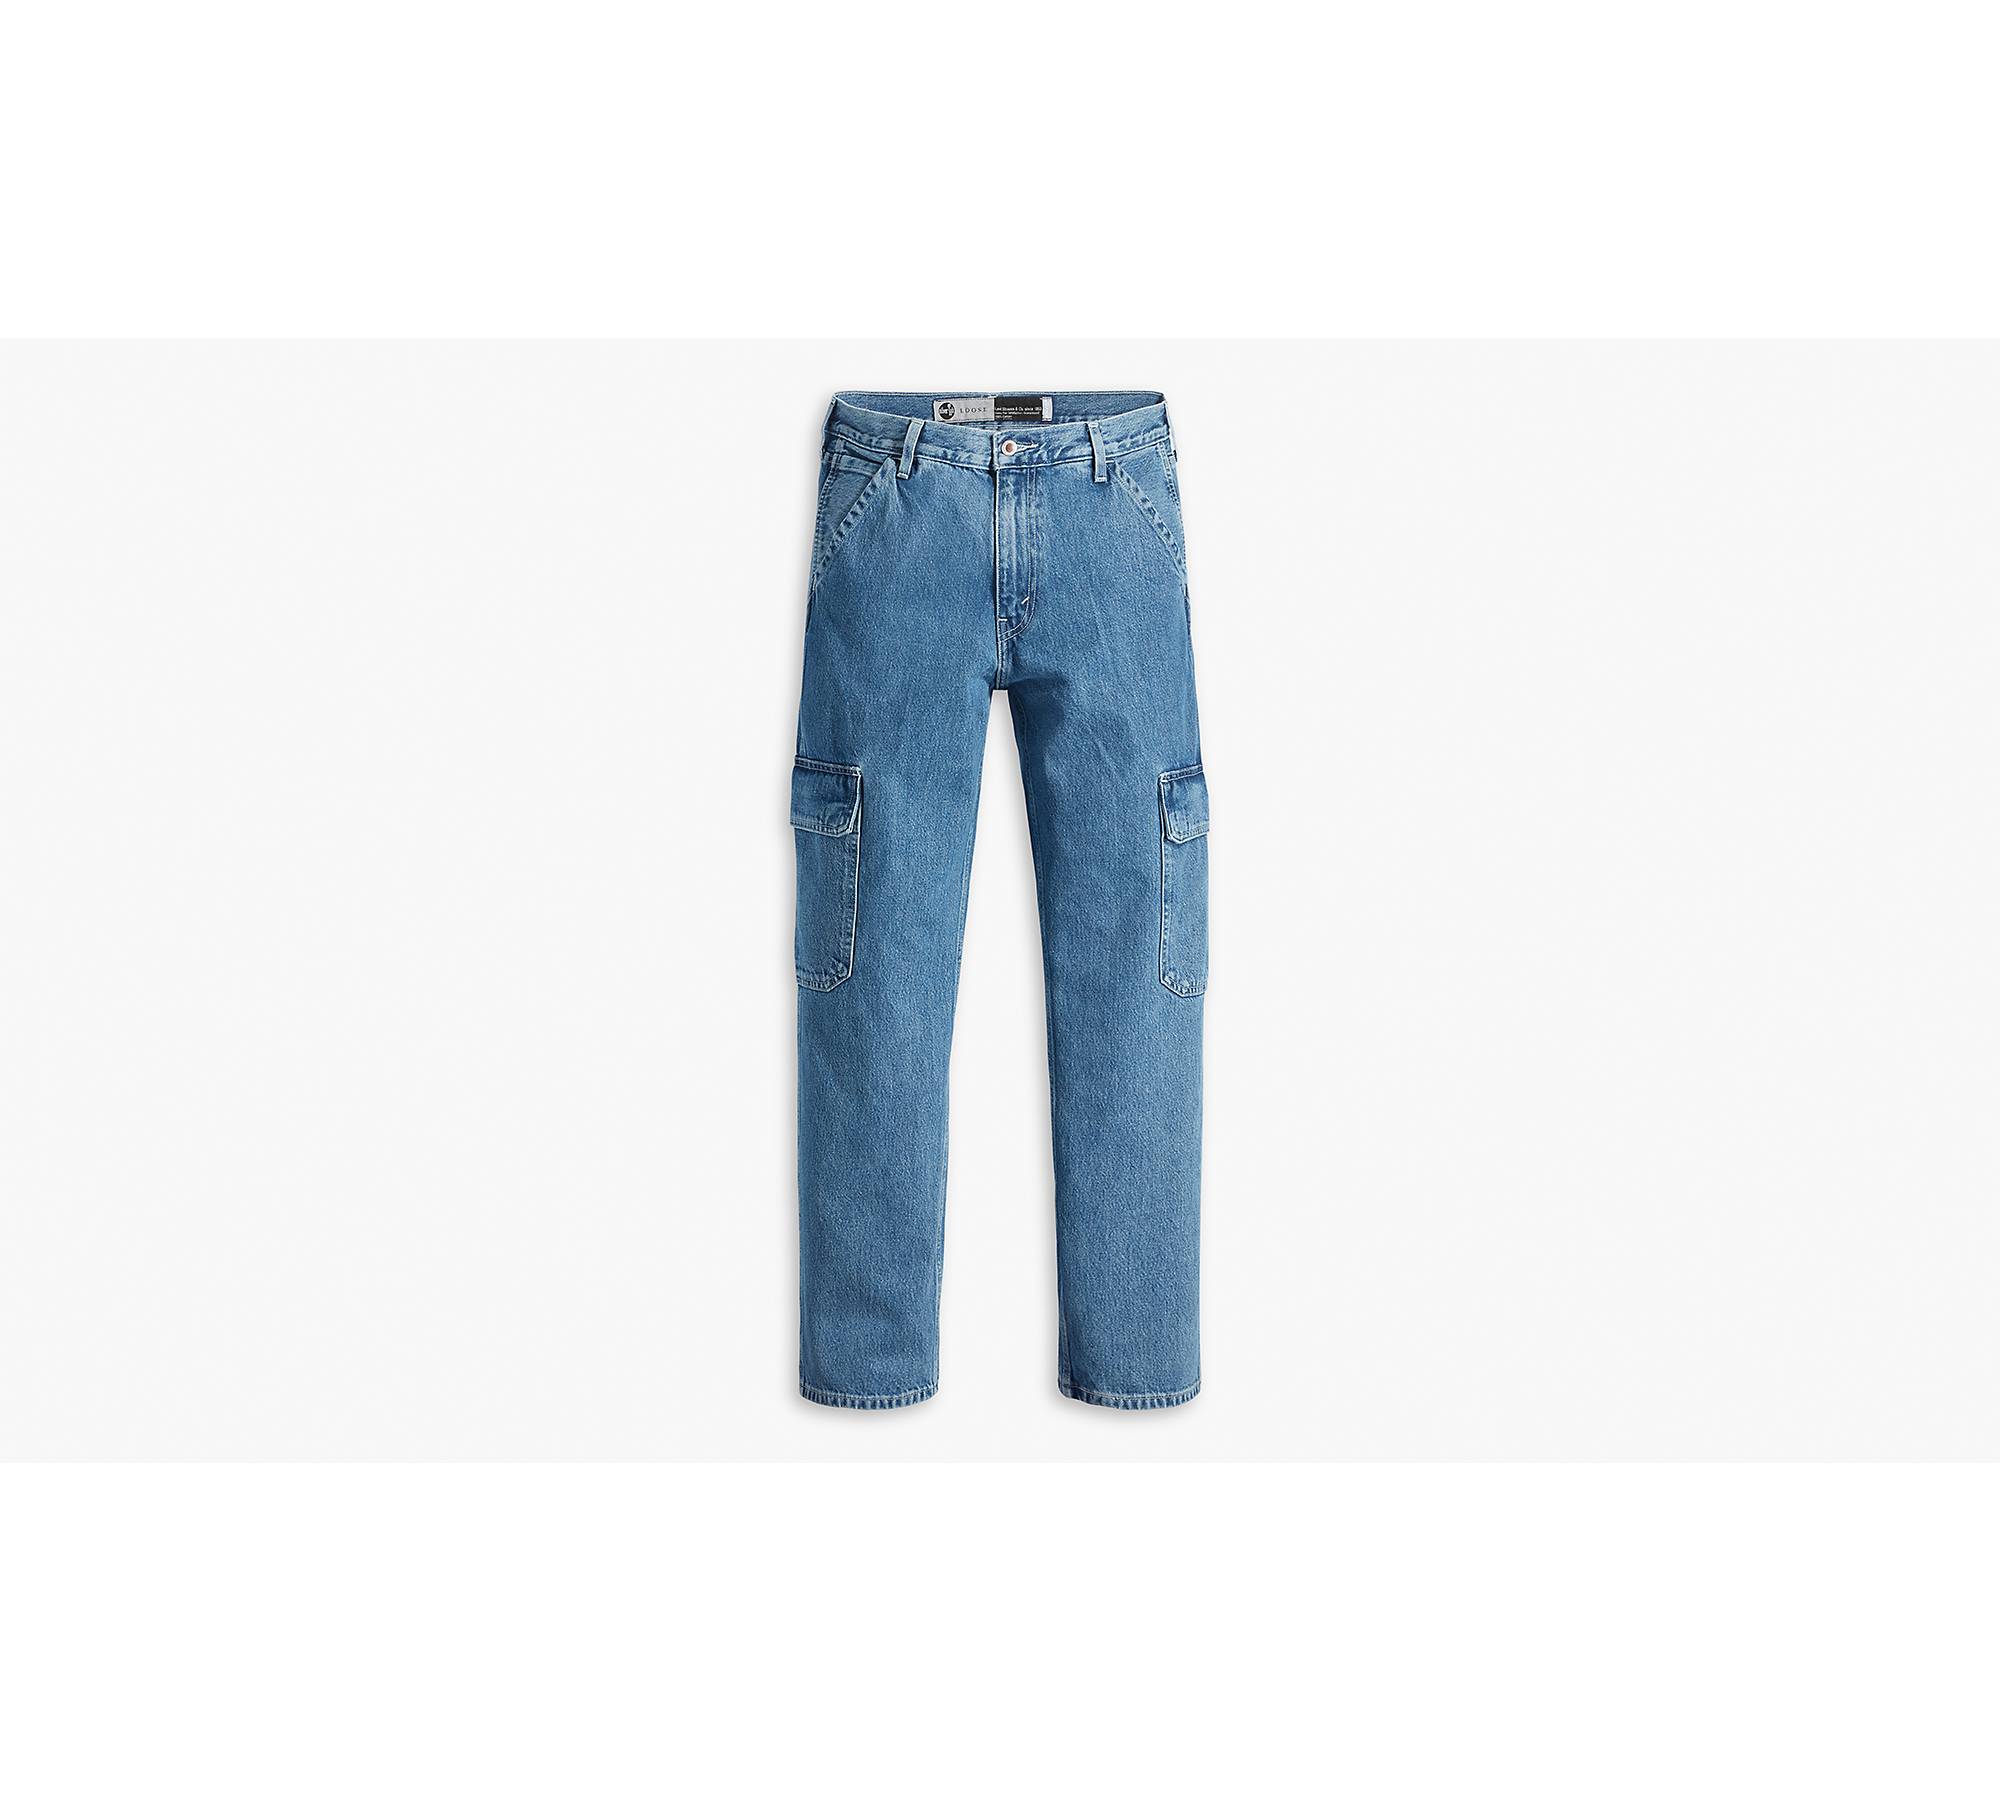 Silvertab™ Loose Cargo Men's Jeans - Medium Wash